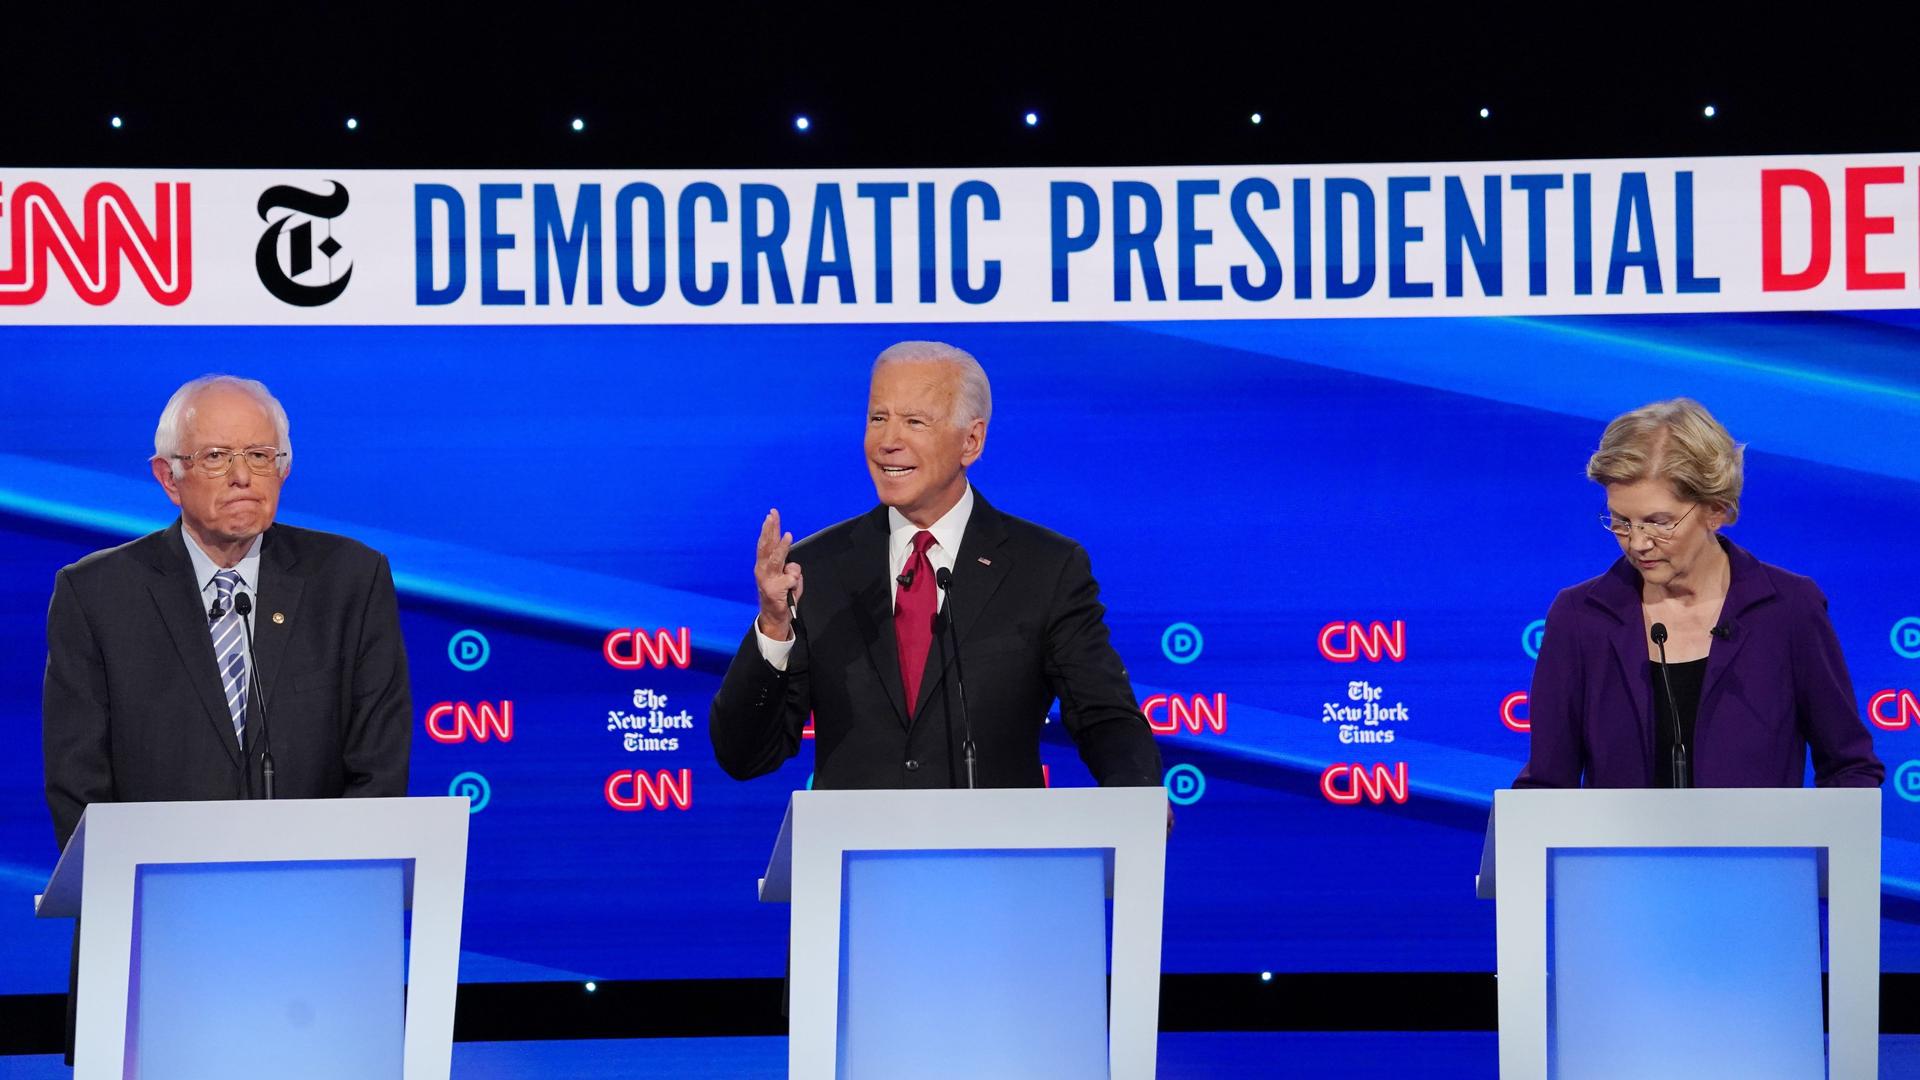 Bernie Sanders, Joe Biden and Elizabeth Warren stand behind podiums